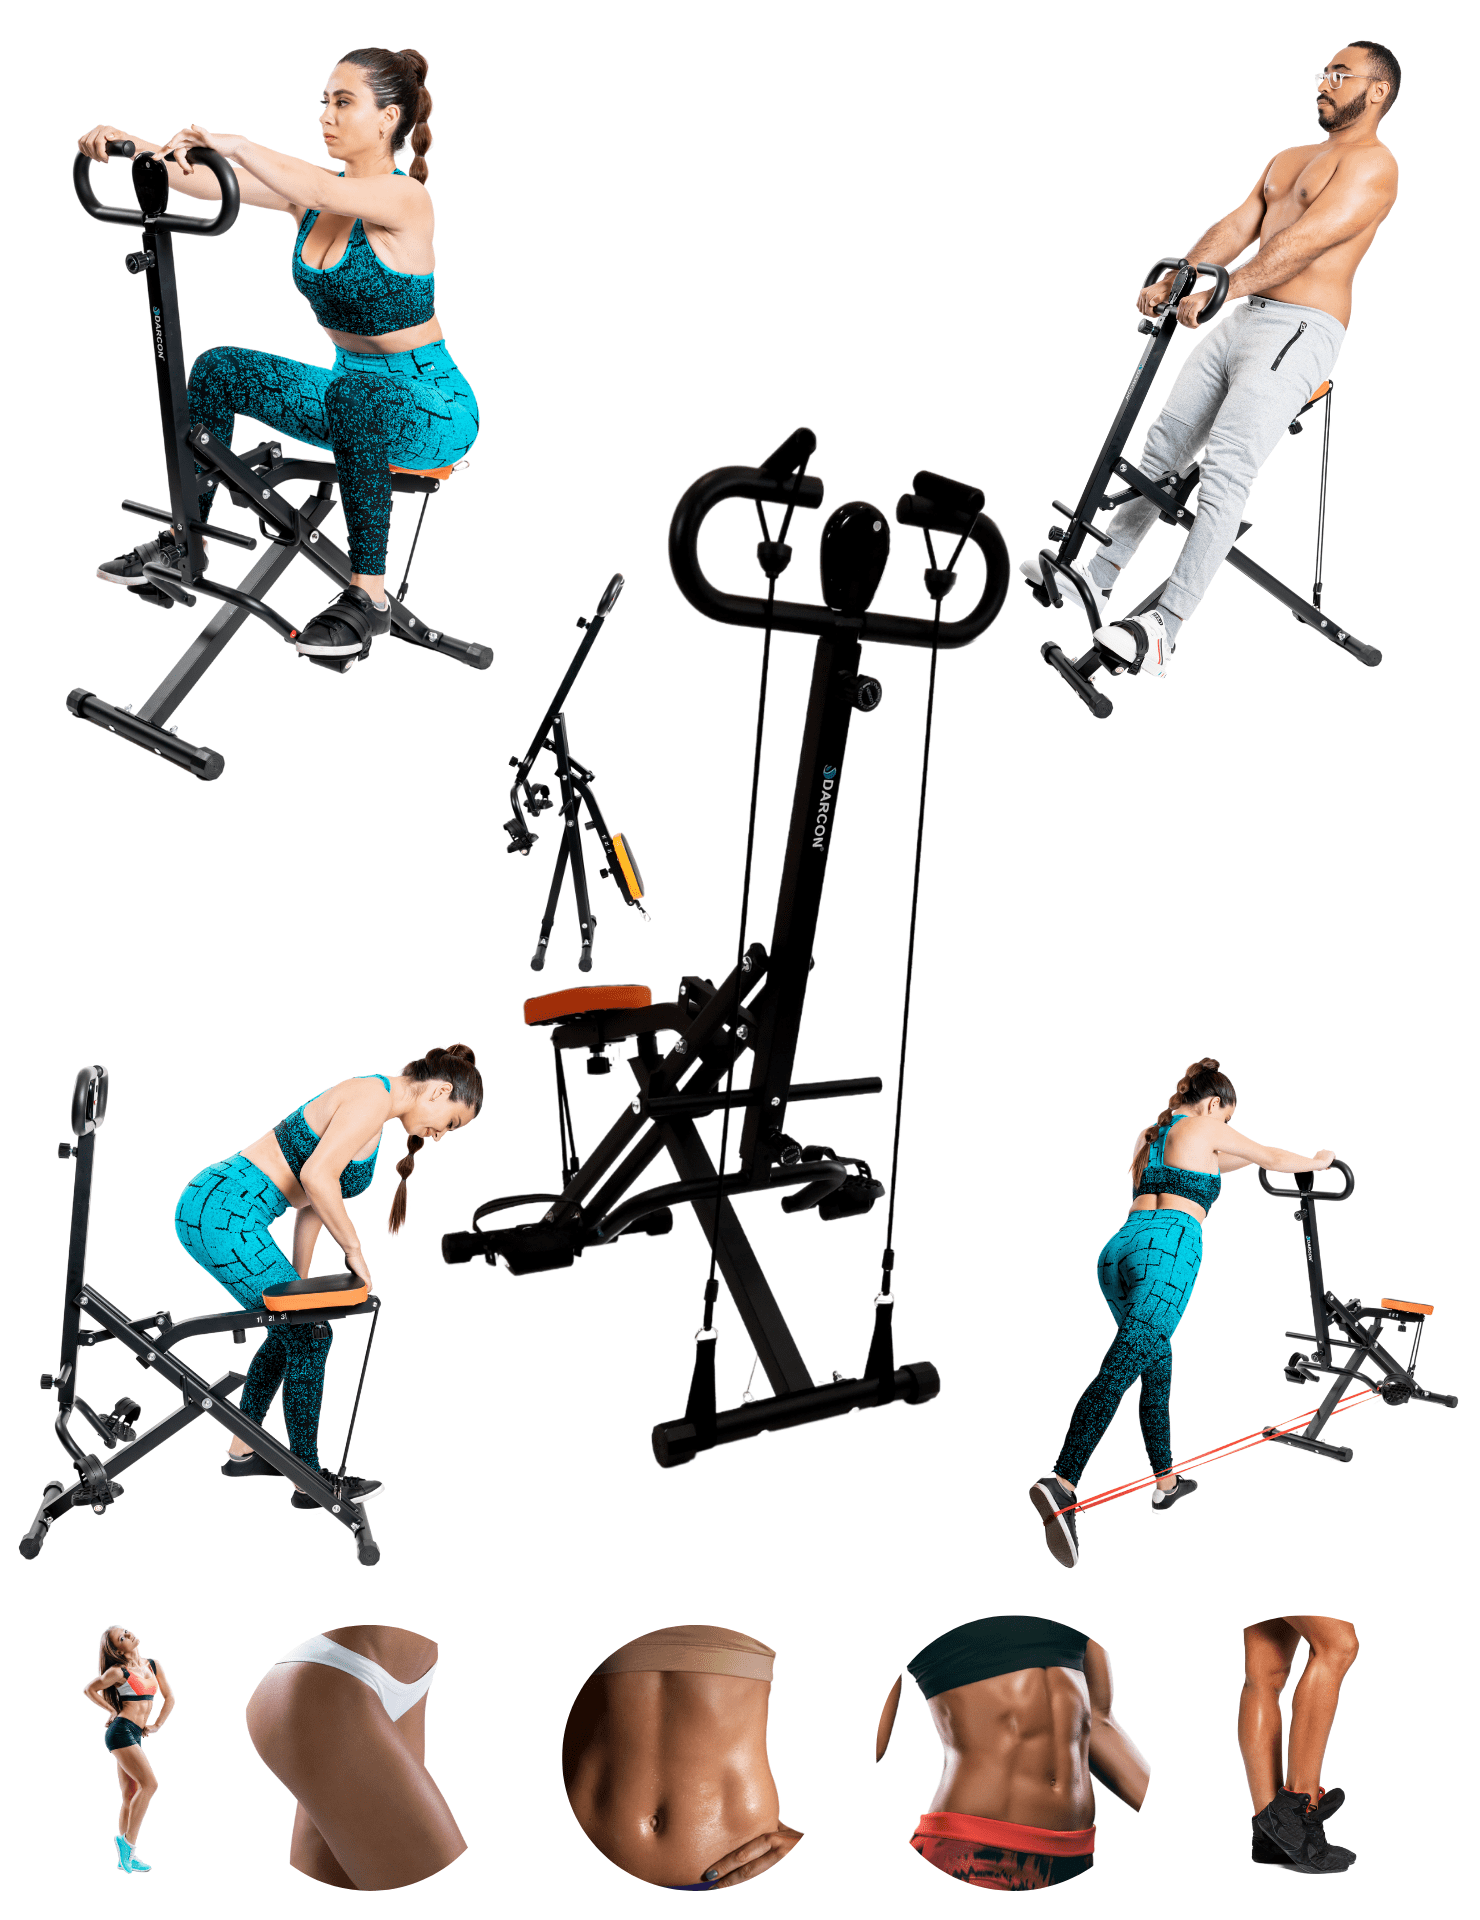 Darcon Fitness DB Method Squat Machine - Home Exercise Equipment for Women-Men,  2 Resistance Levels 